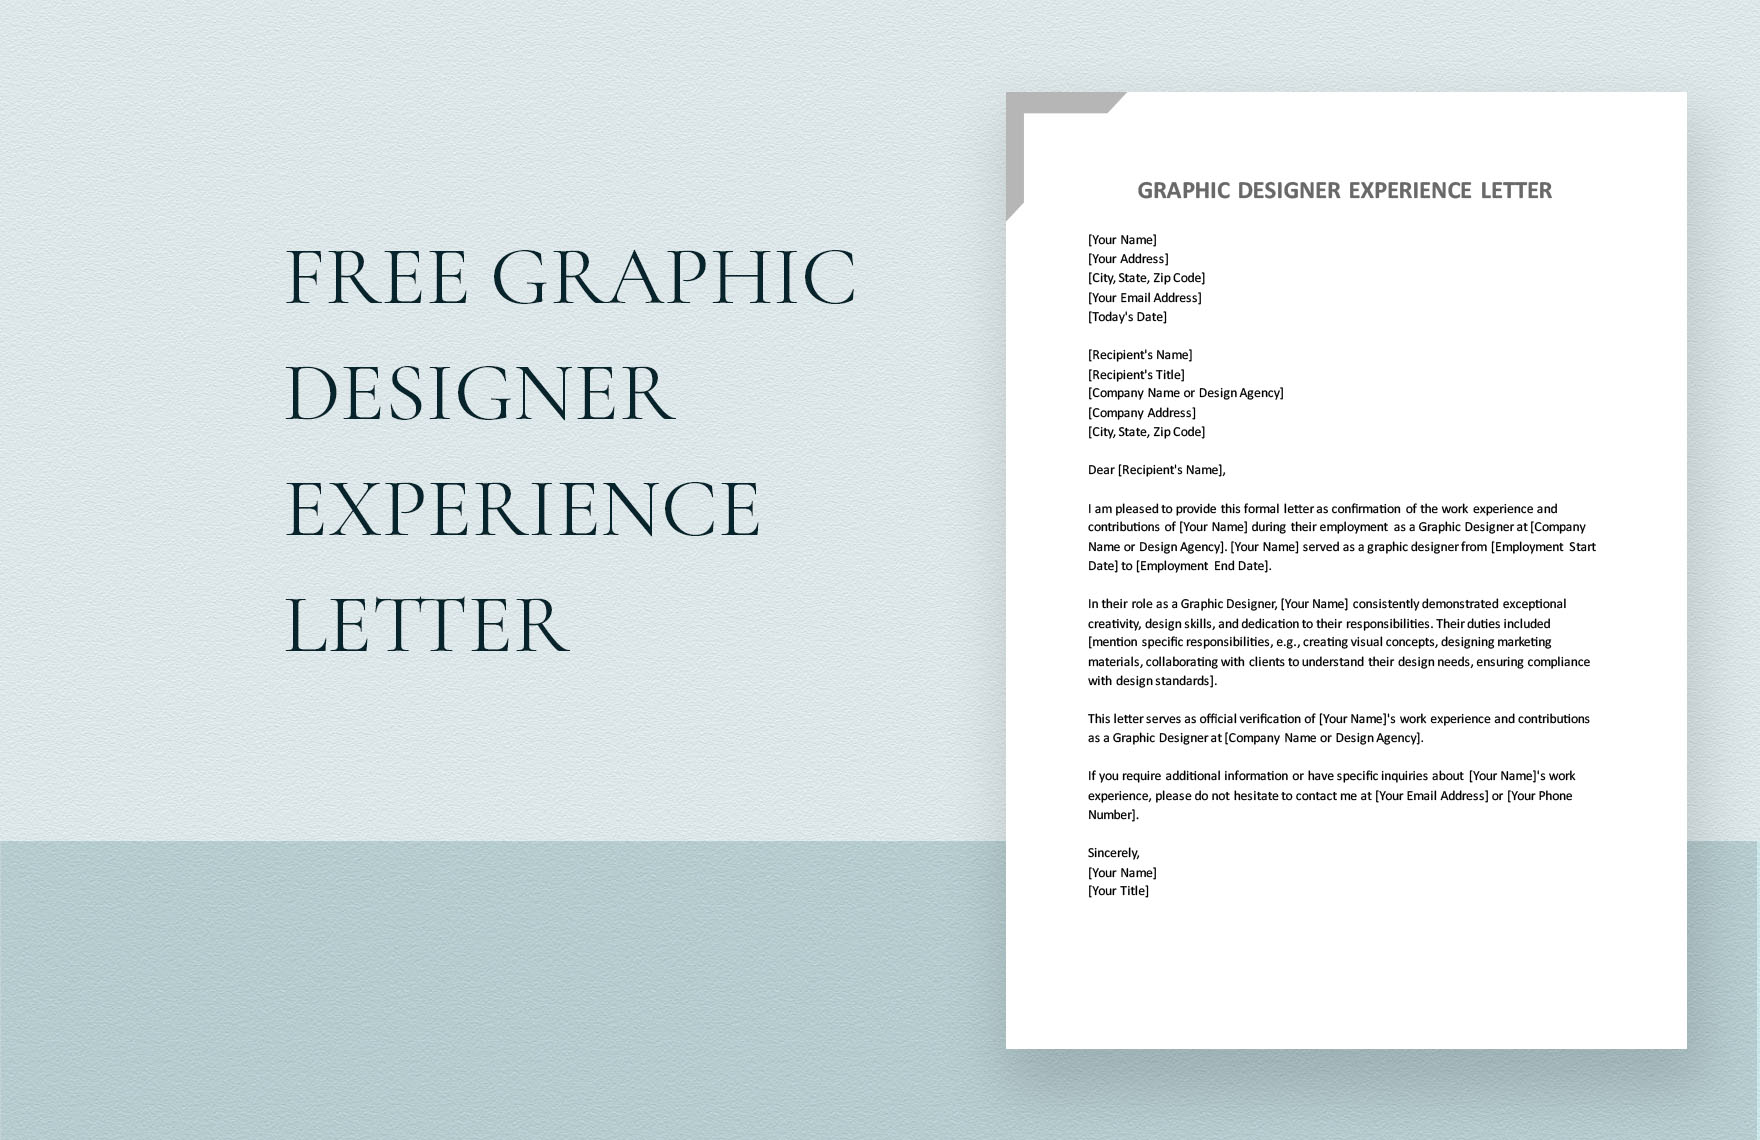 Graphic Designer Experience Letter